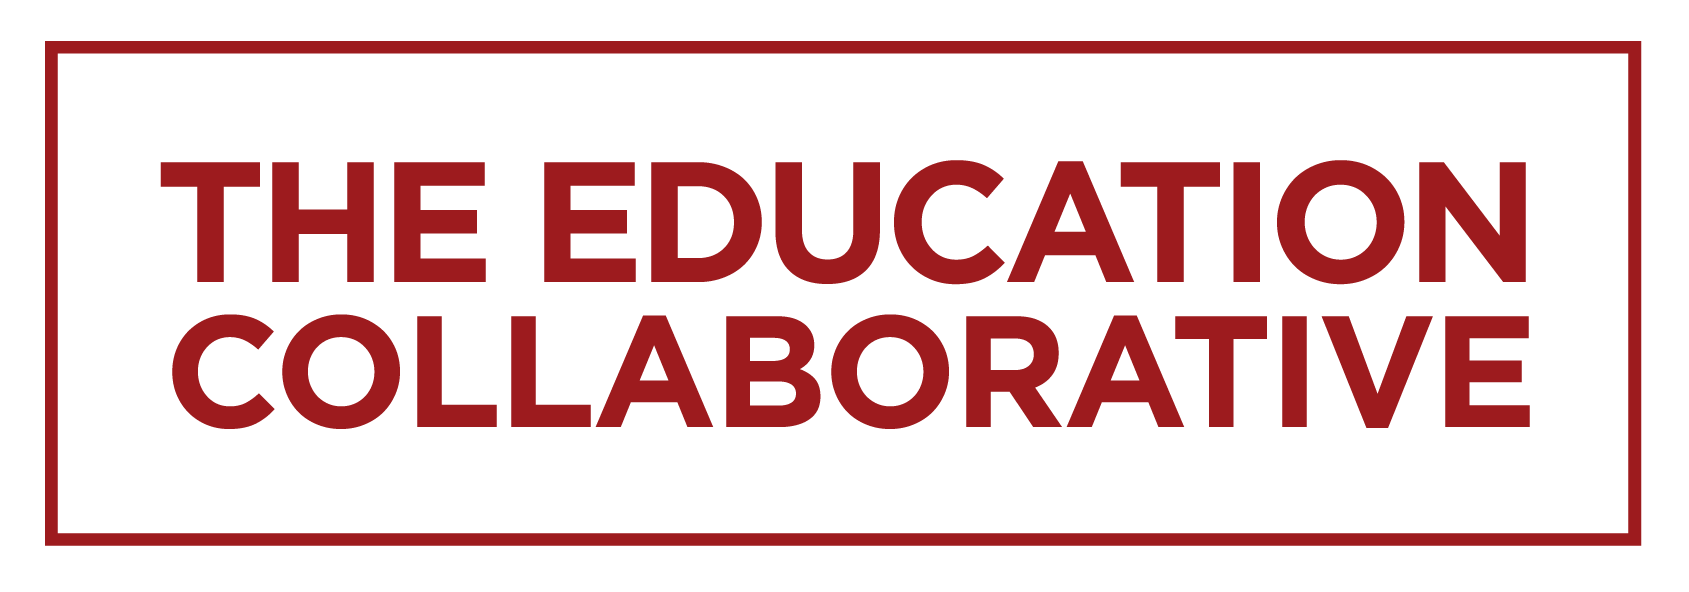 The Education Collaborative